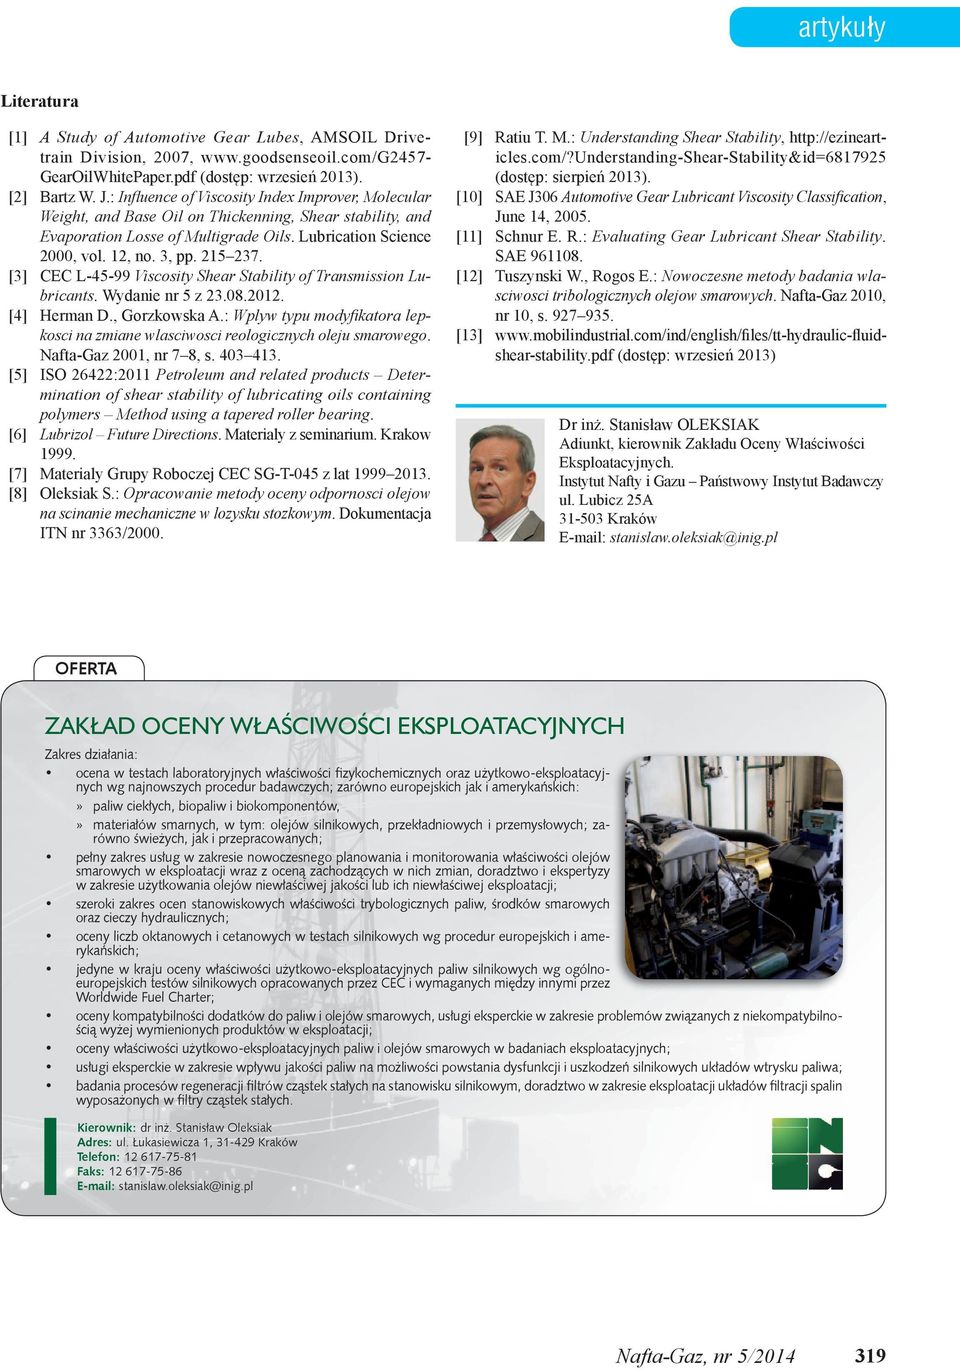 215 237. [3] CEC L-45-99 Viscosity Shear Stability of Transmission Lubricants. Wydanie nr 5 z 23.08.2012. [4] Herman D., Gorzkowska A.